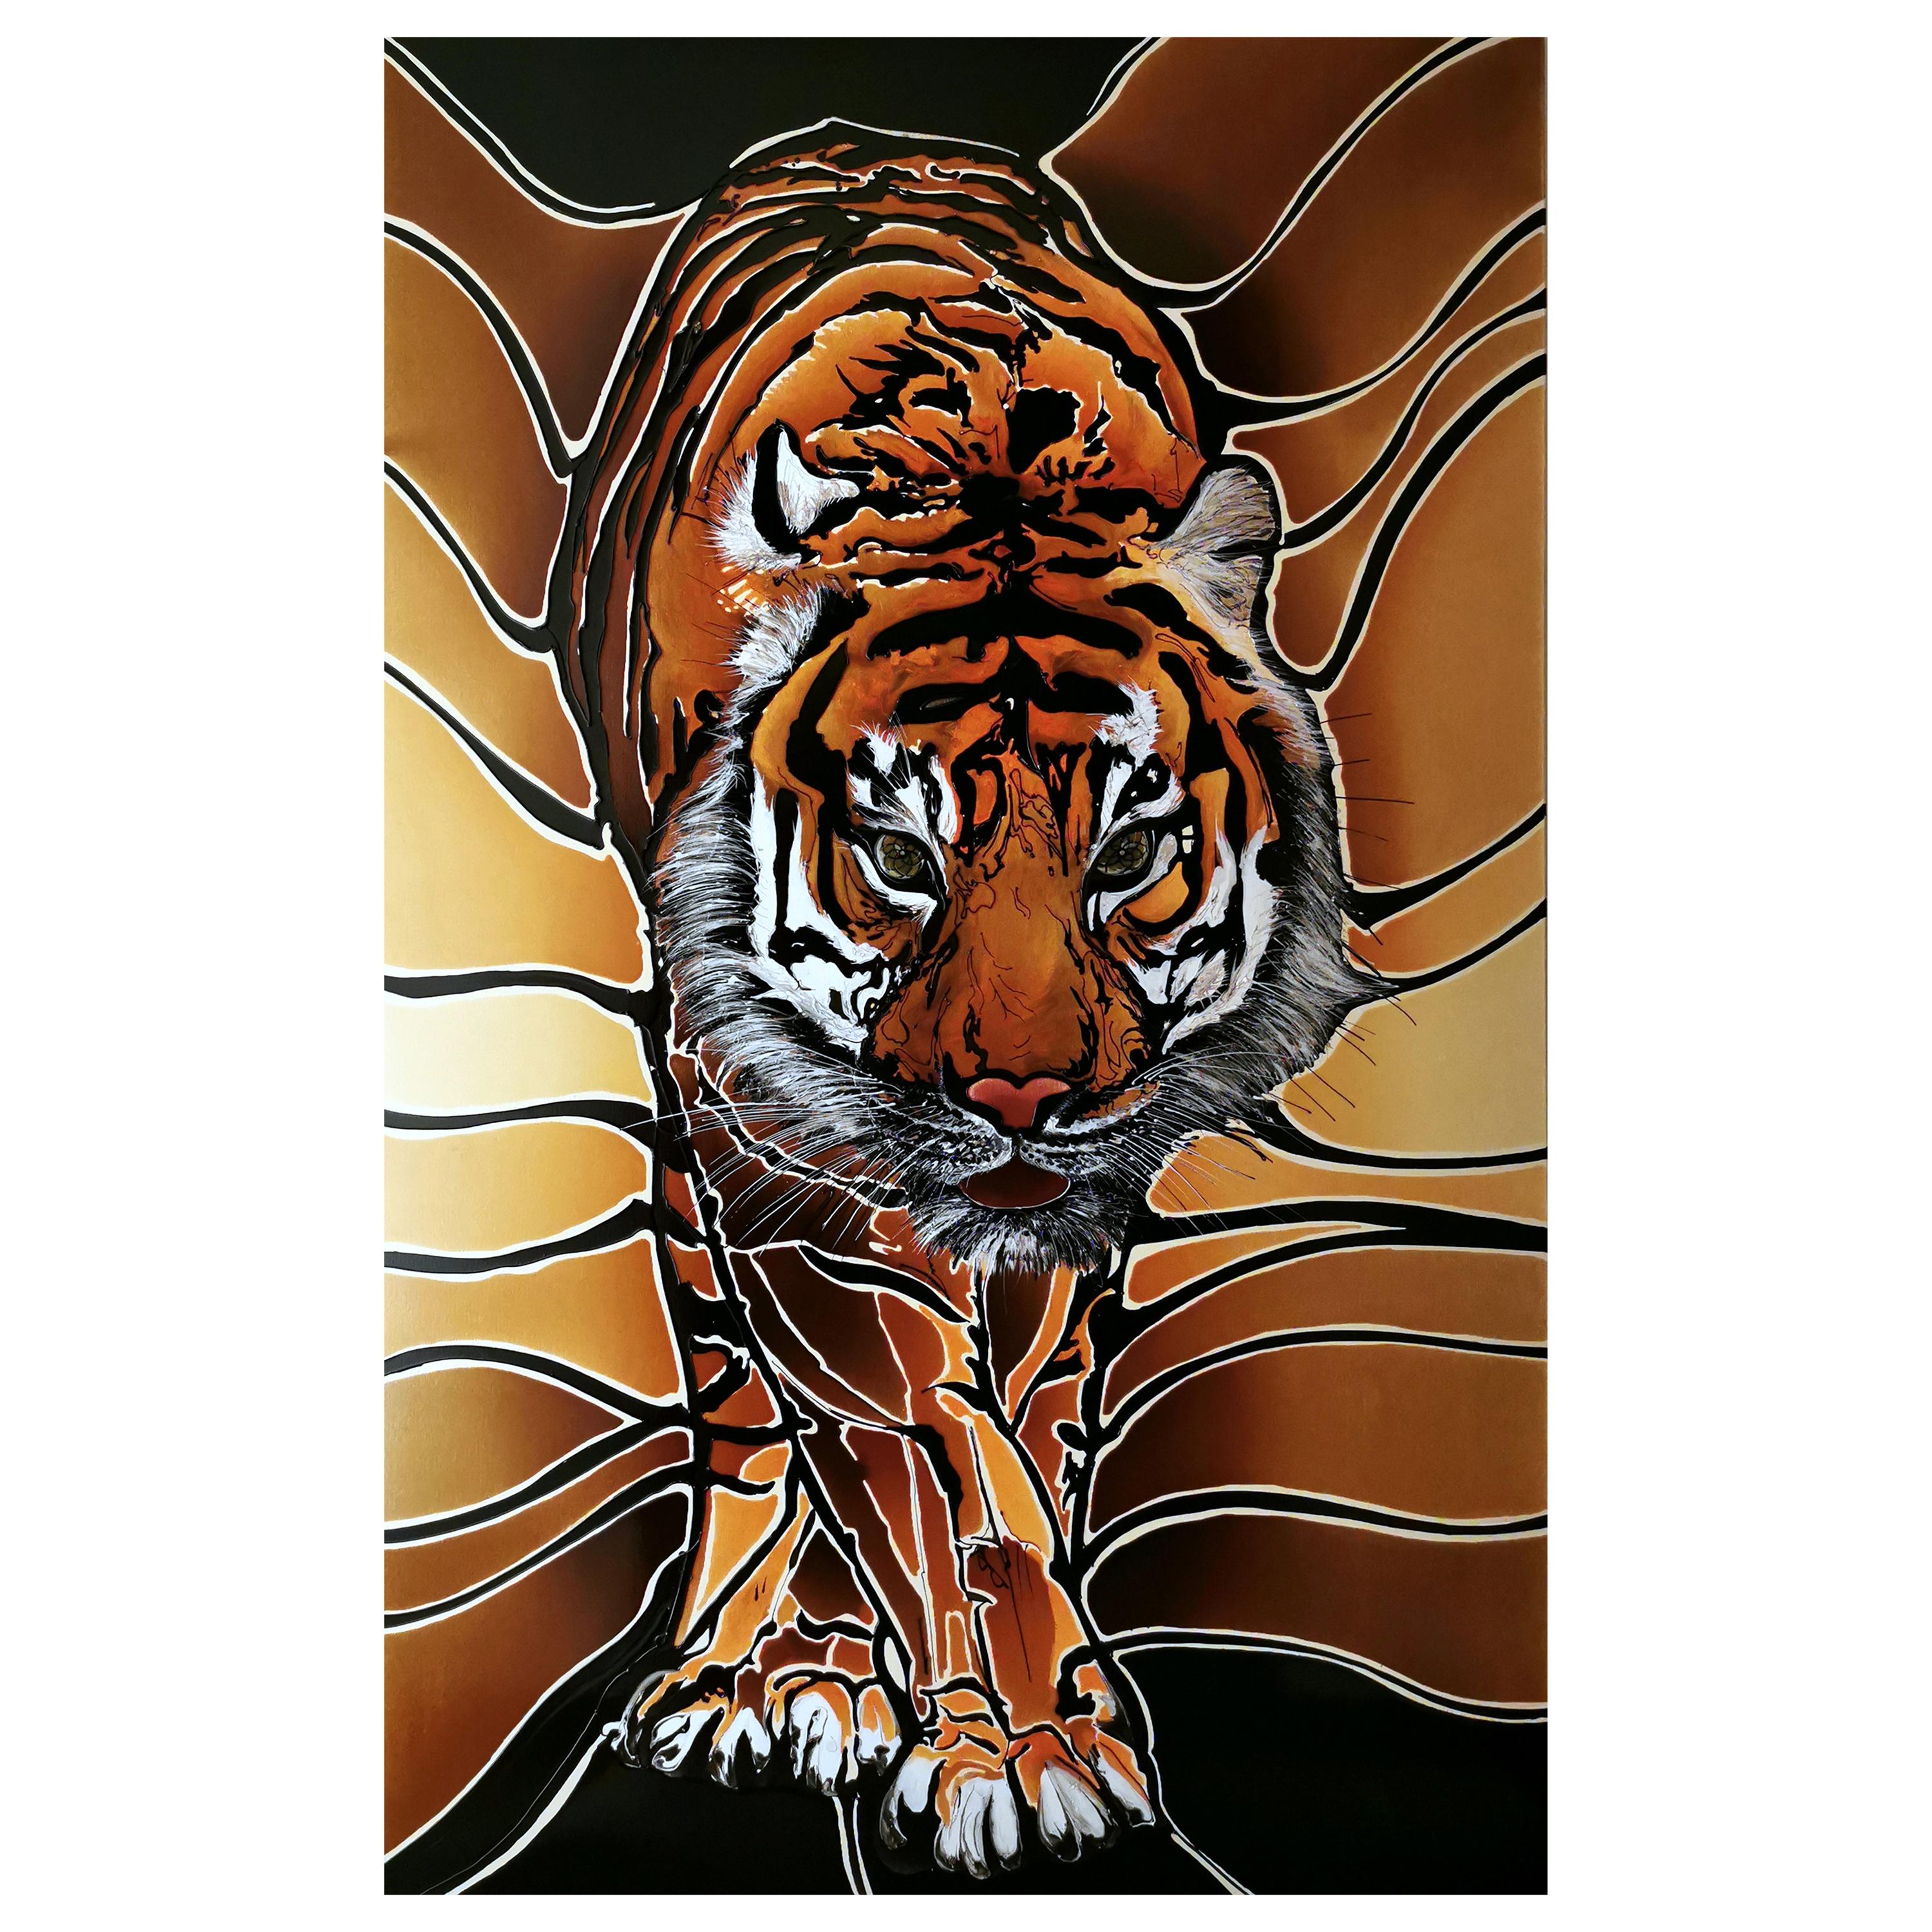 Fine Arts, The Tiger For Sale